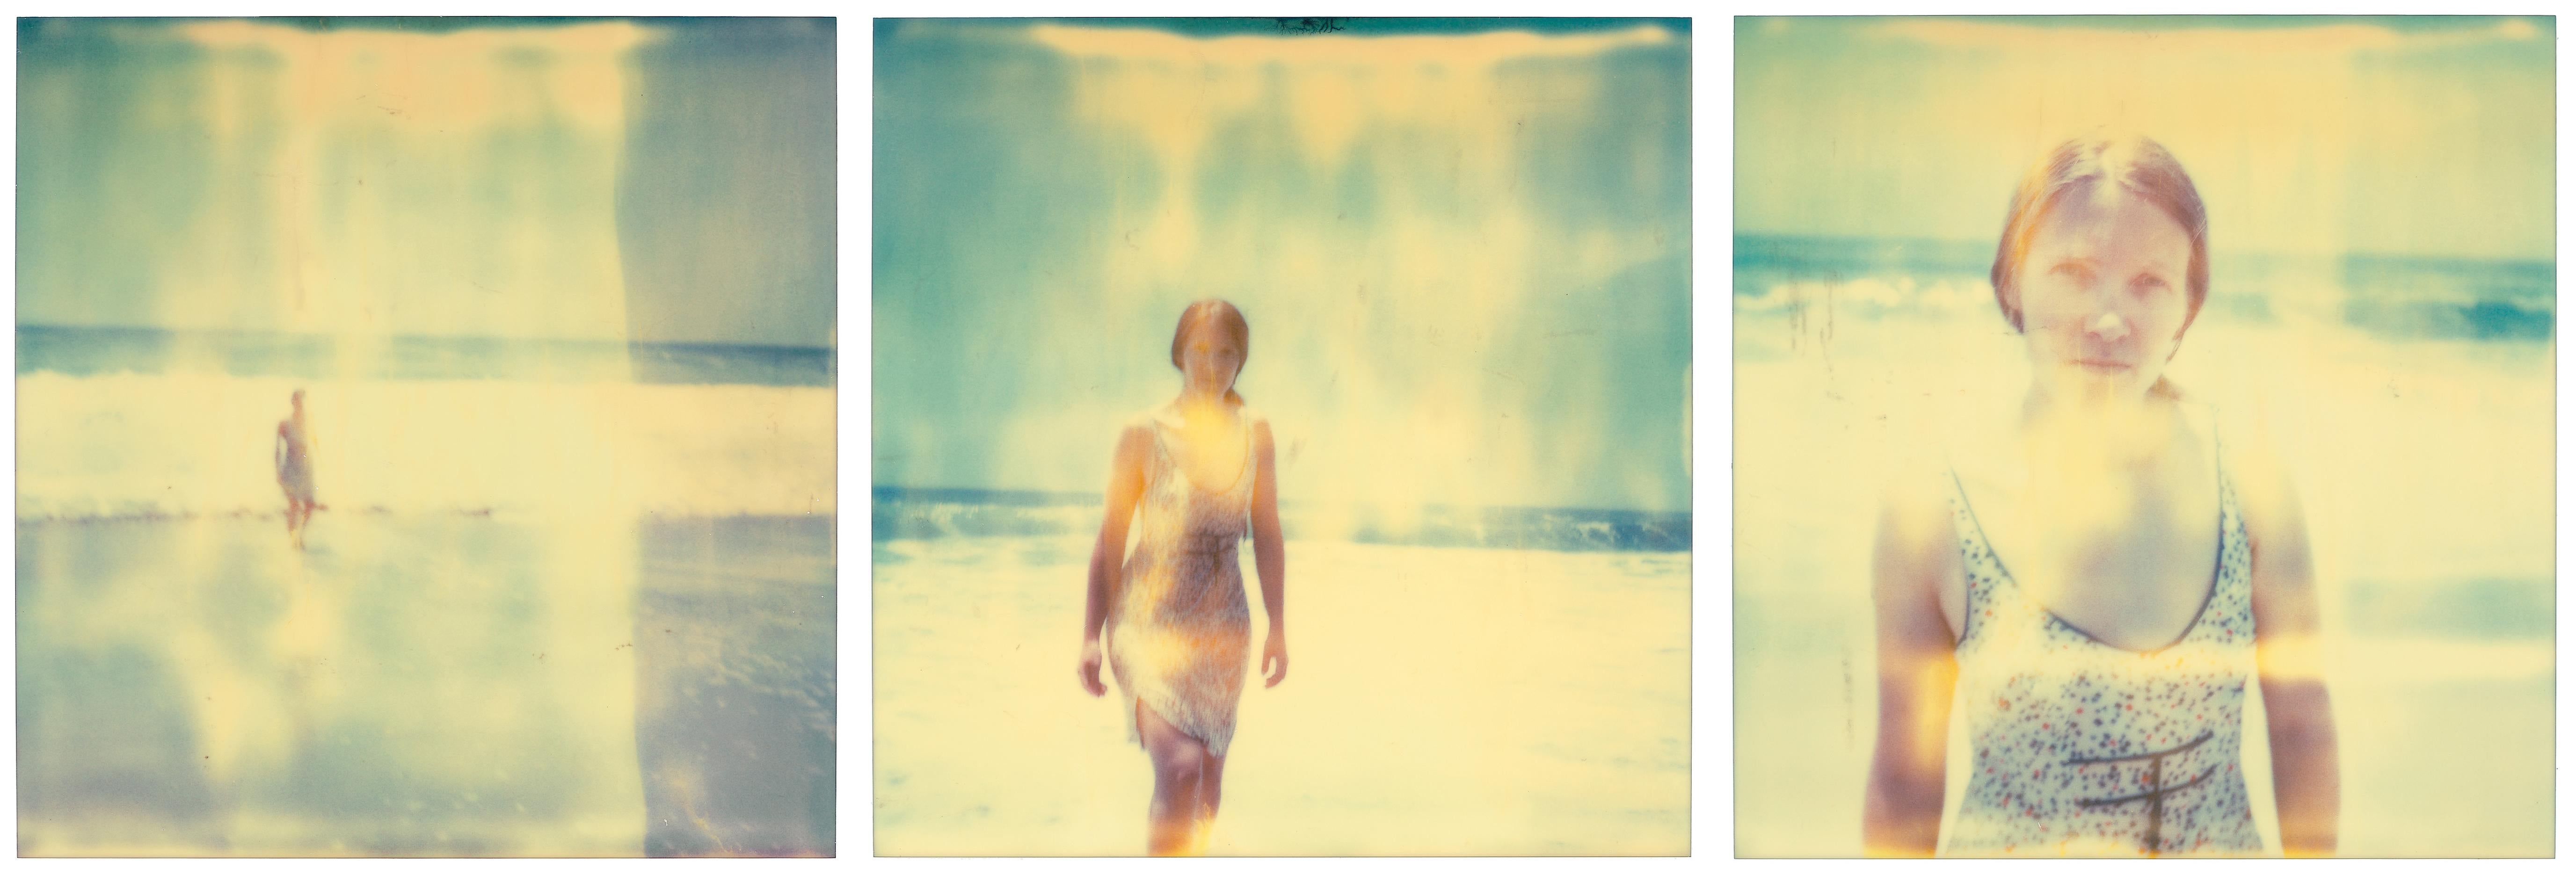 Femme à Malibu (Stranger than Paradise) - Polaroïd, analogique, 21e siècle, Femme - Photograph de Stefanie Schneider